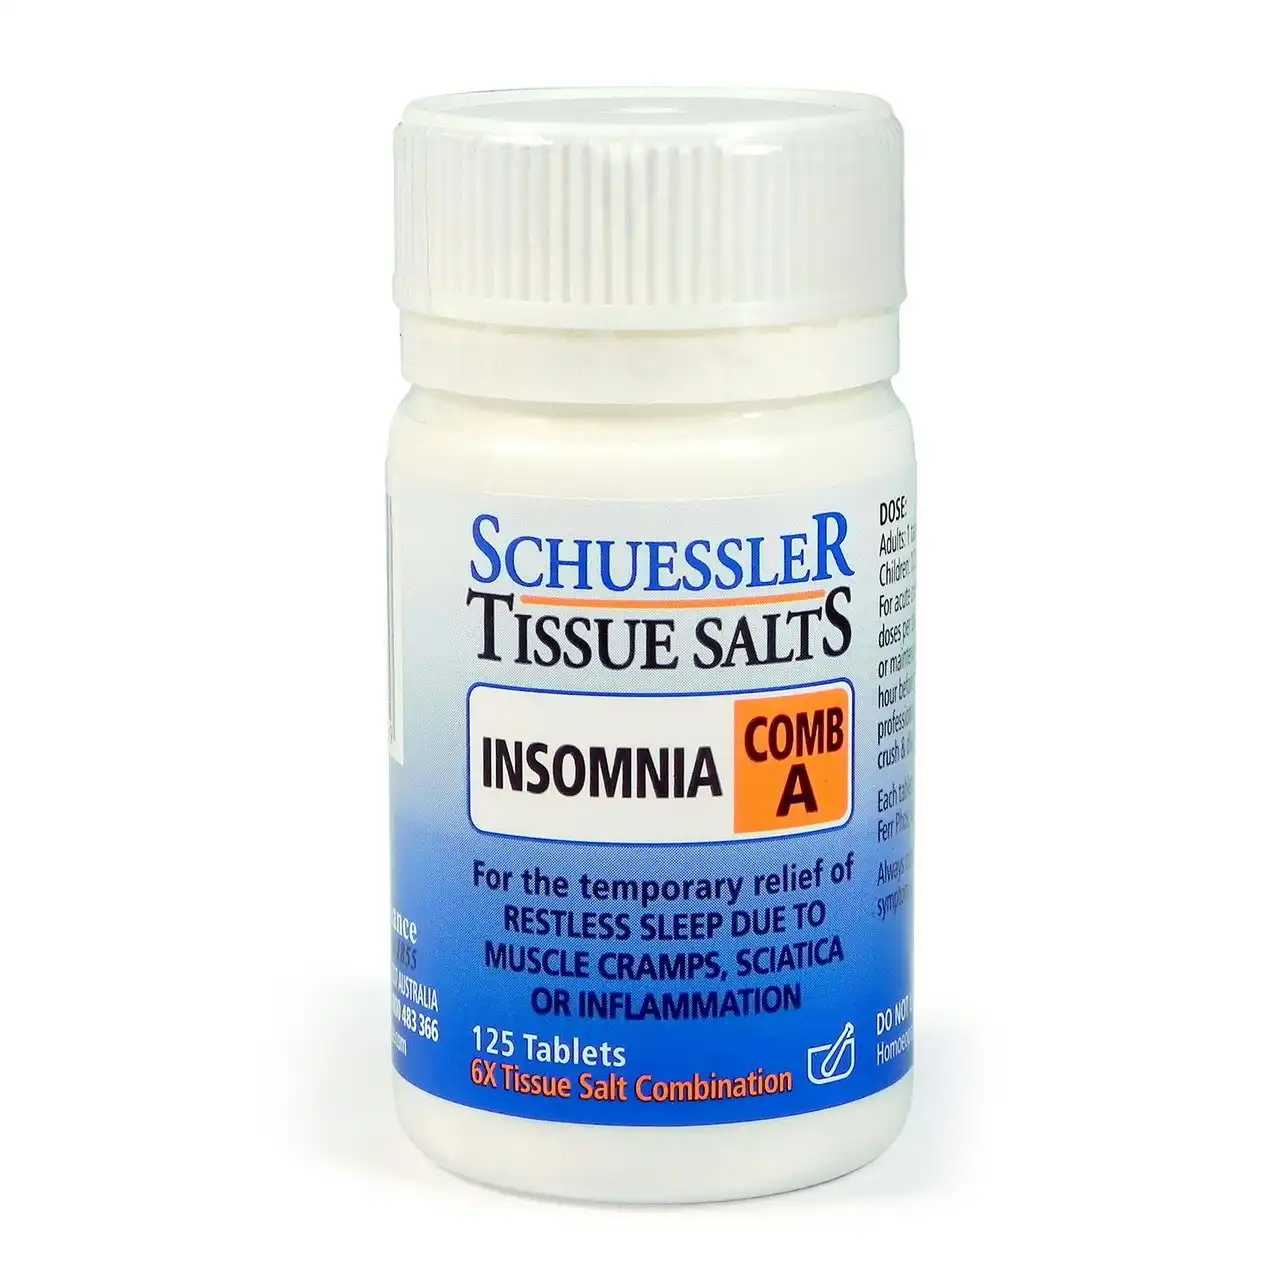 Schuessler Tissue Salts Insomnia Comb A 125 Tablets